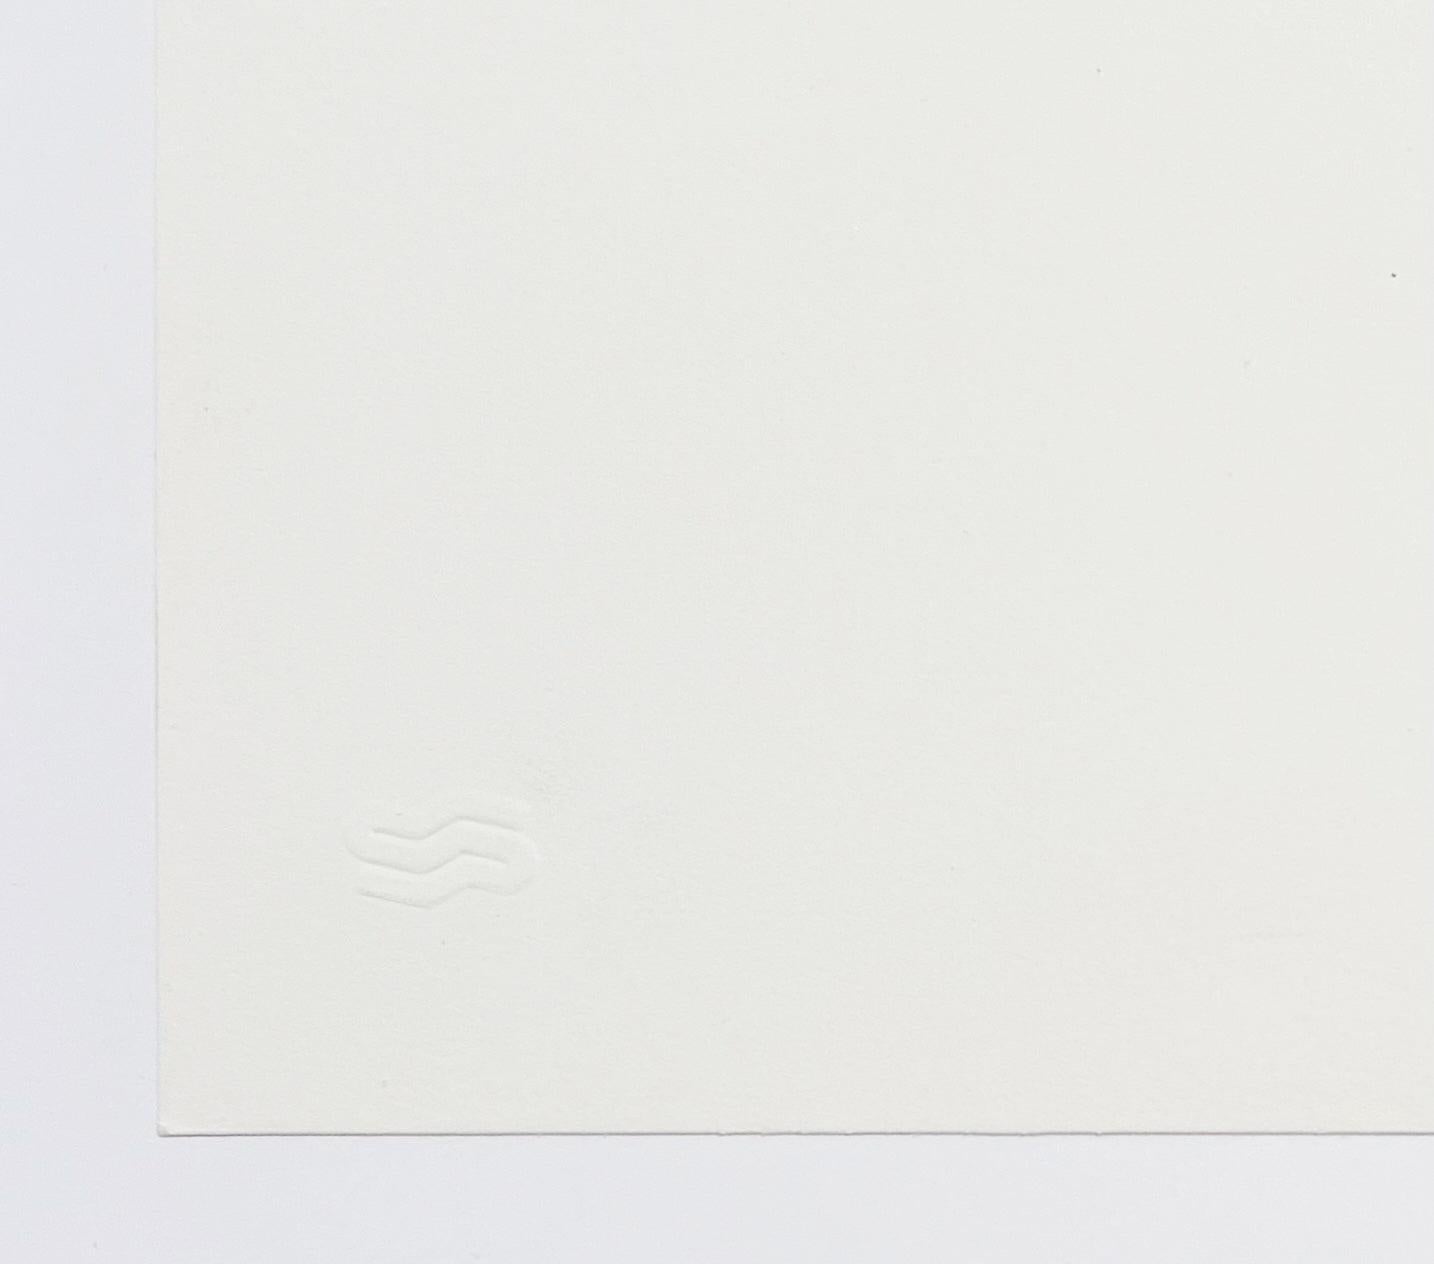 Artist: Andy Warhol
Title: Committee 2000
Medium: Screenprint on Lenox Museum Board
Date: 1982
Edition: 1772/2000
Frame Size: 37